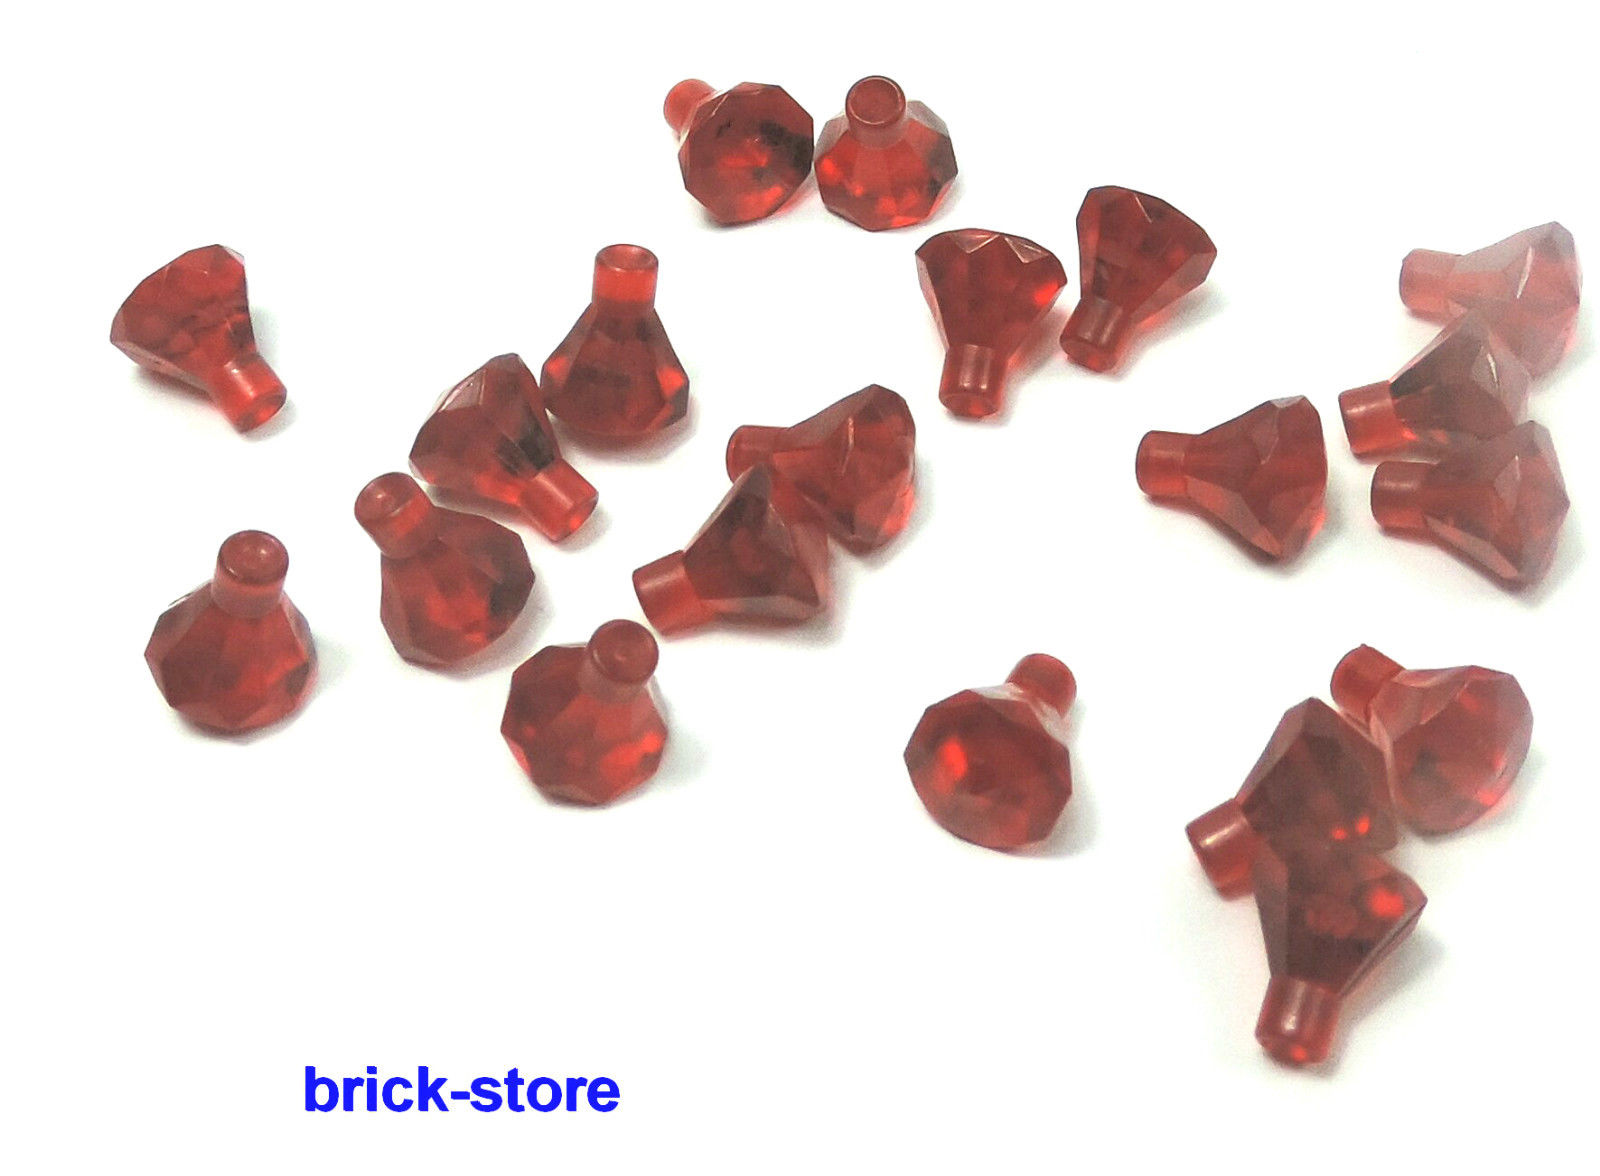 omdrejningspunkt Polering Premier brick-store.de - LEGO® tranparent rote Diamanten/KristallePerlen / 20 Stück